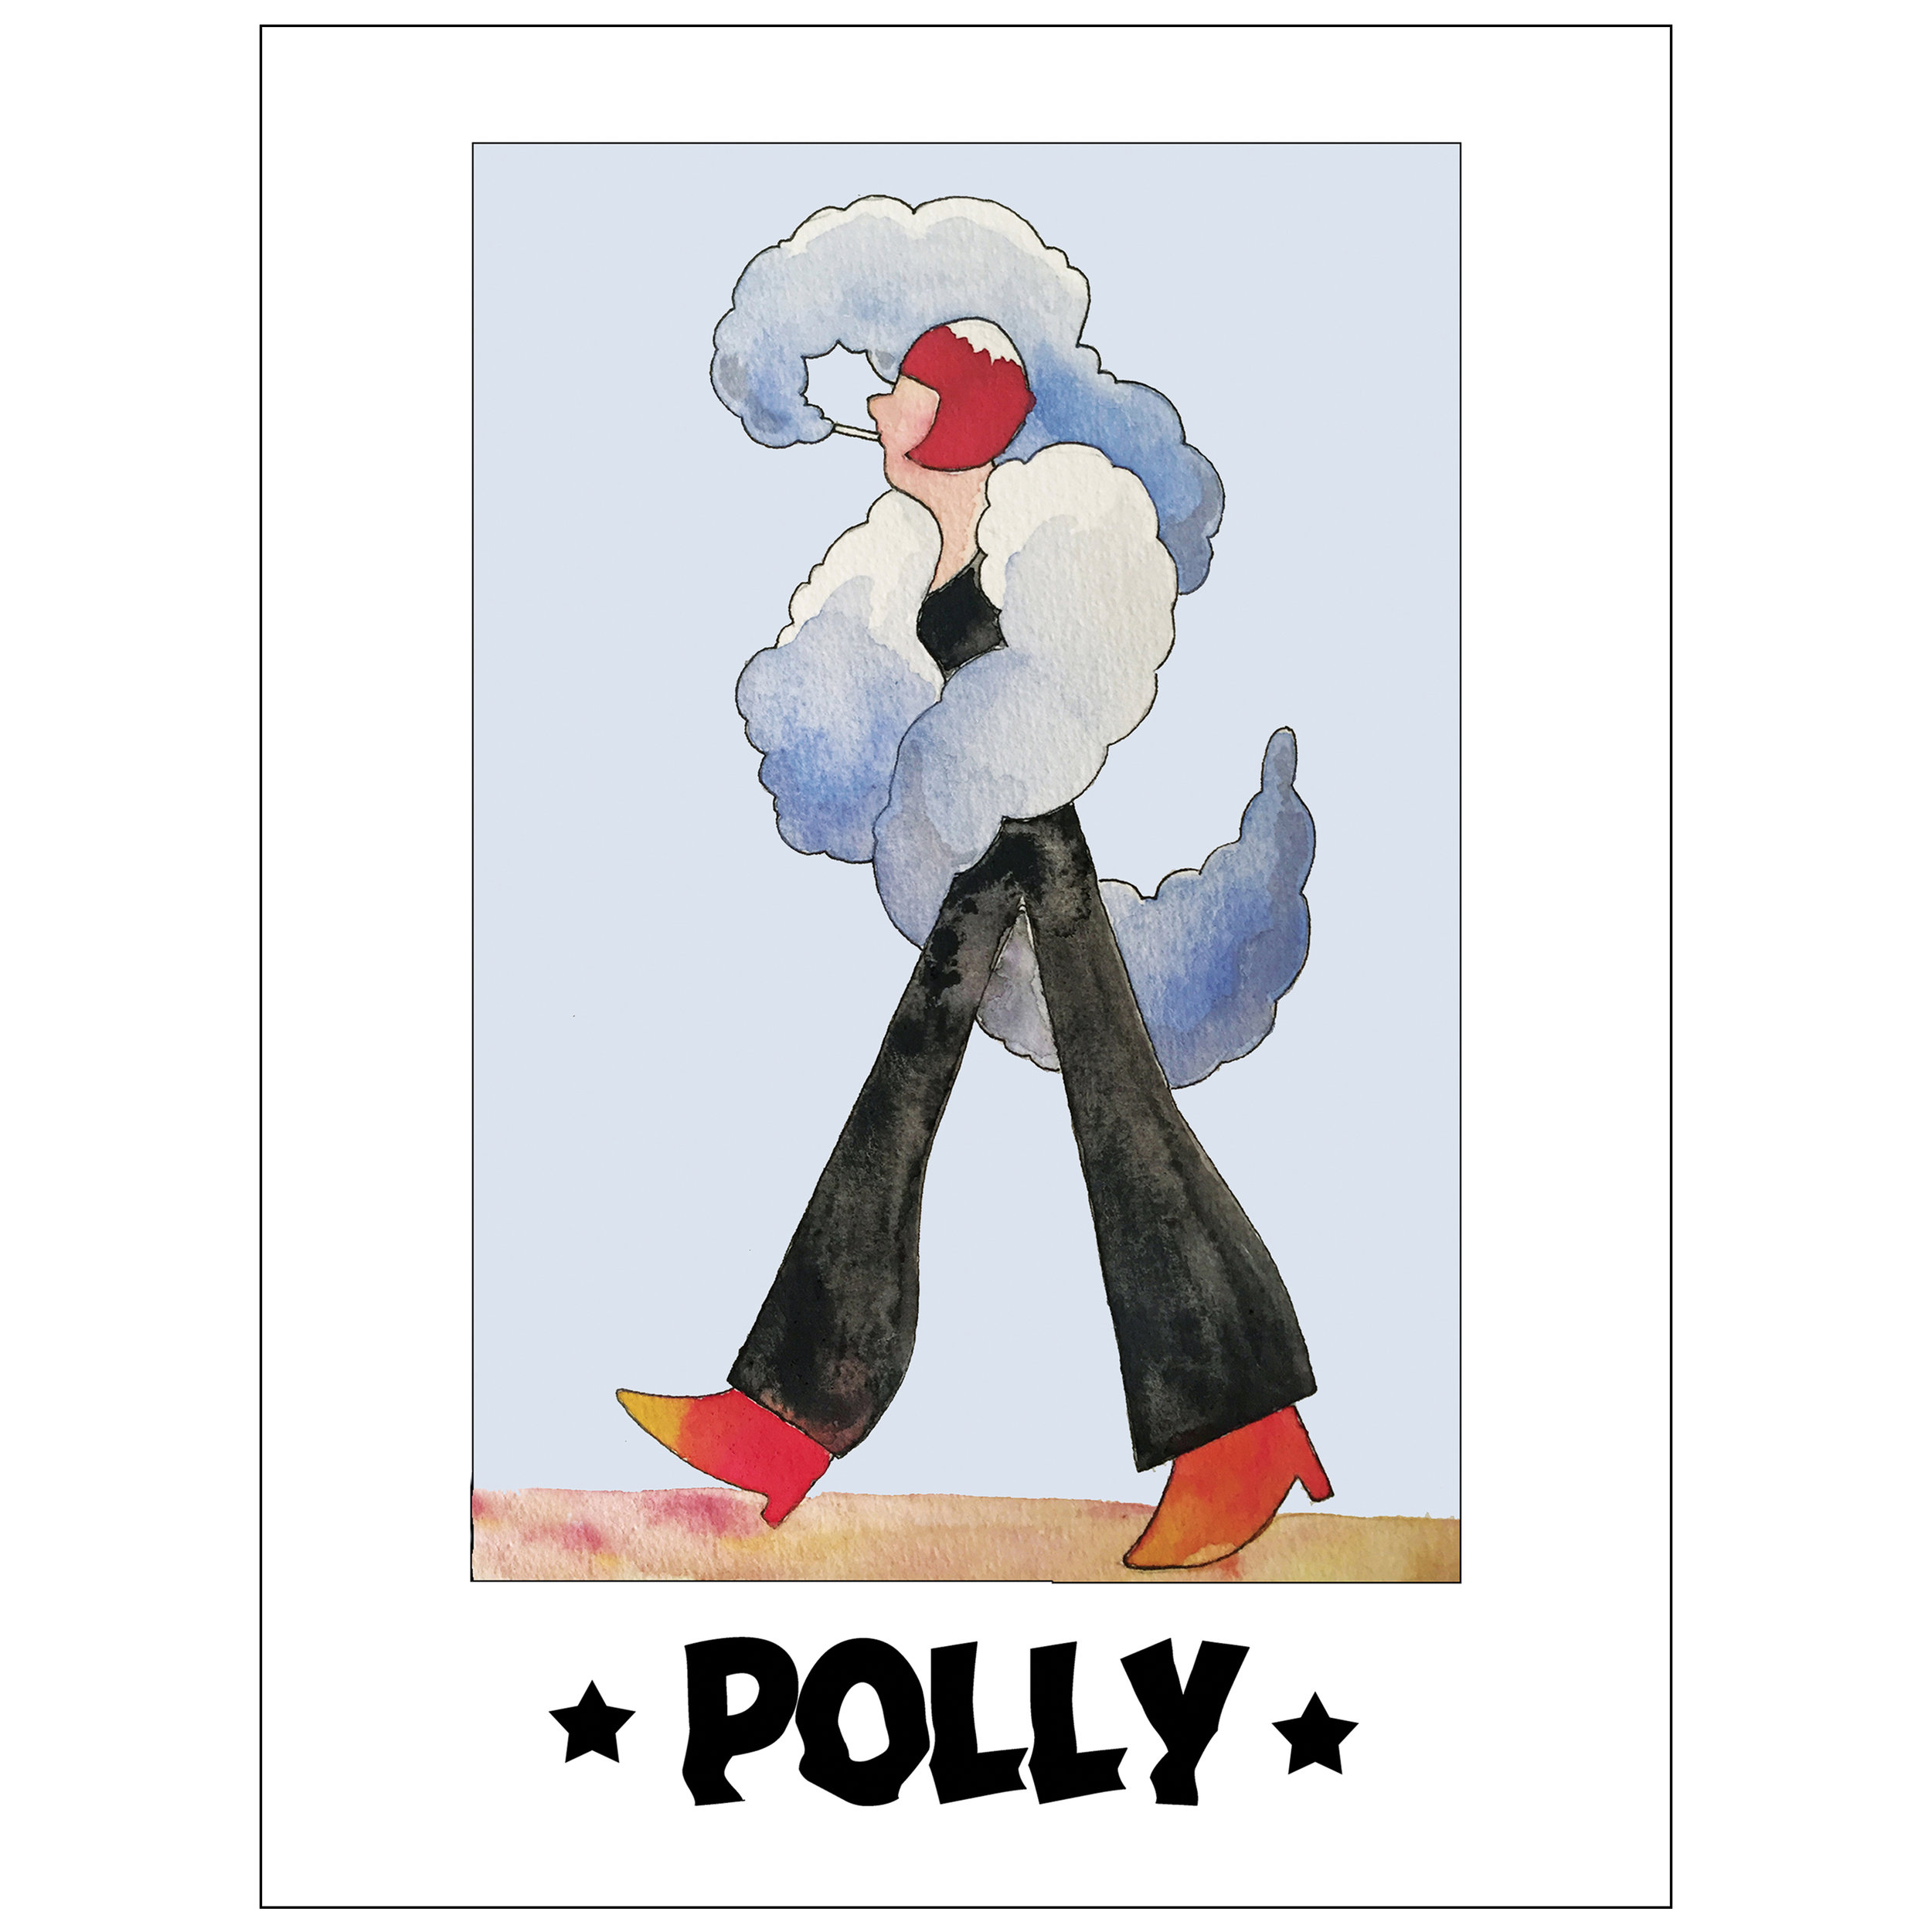 polly_web.jpg